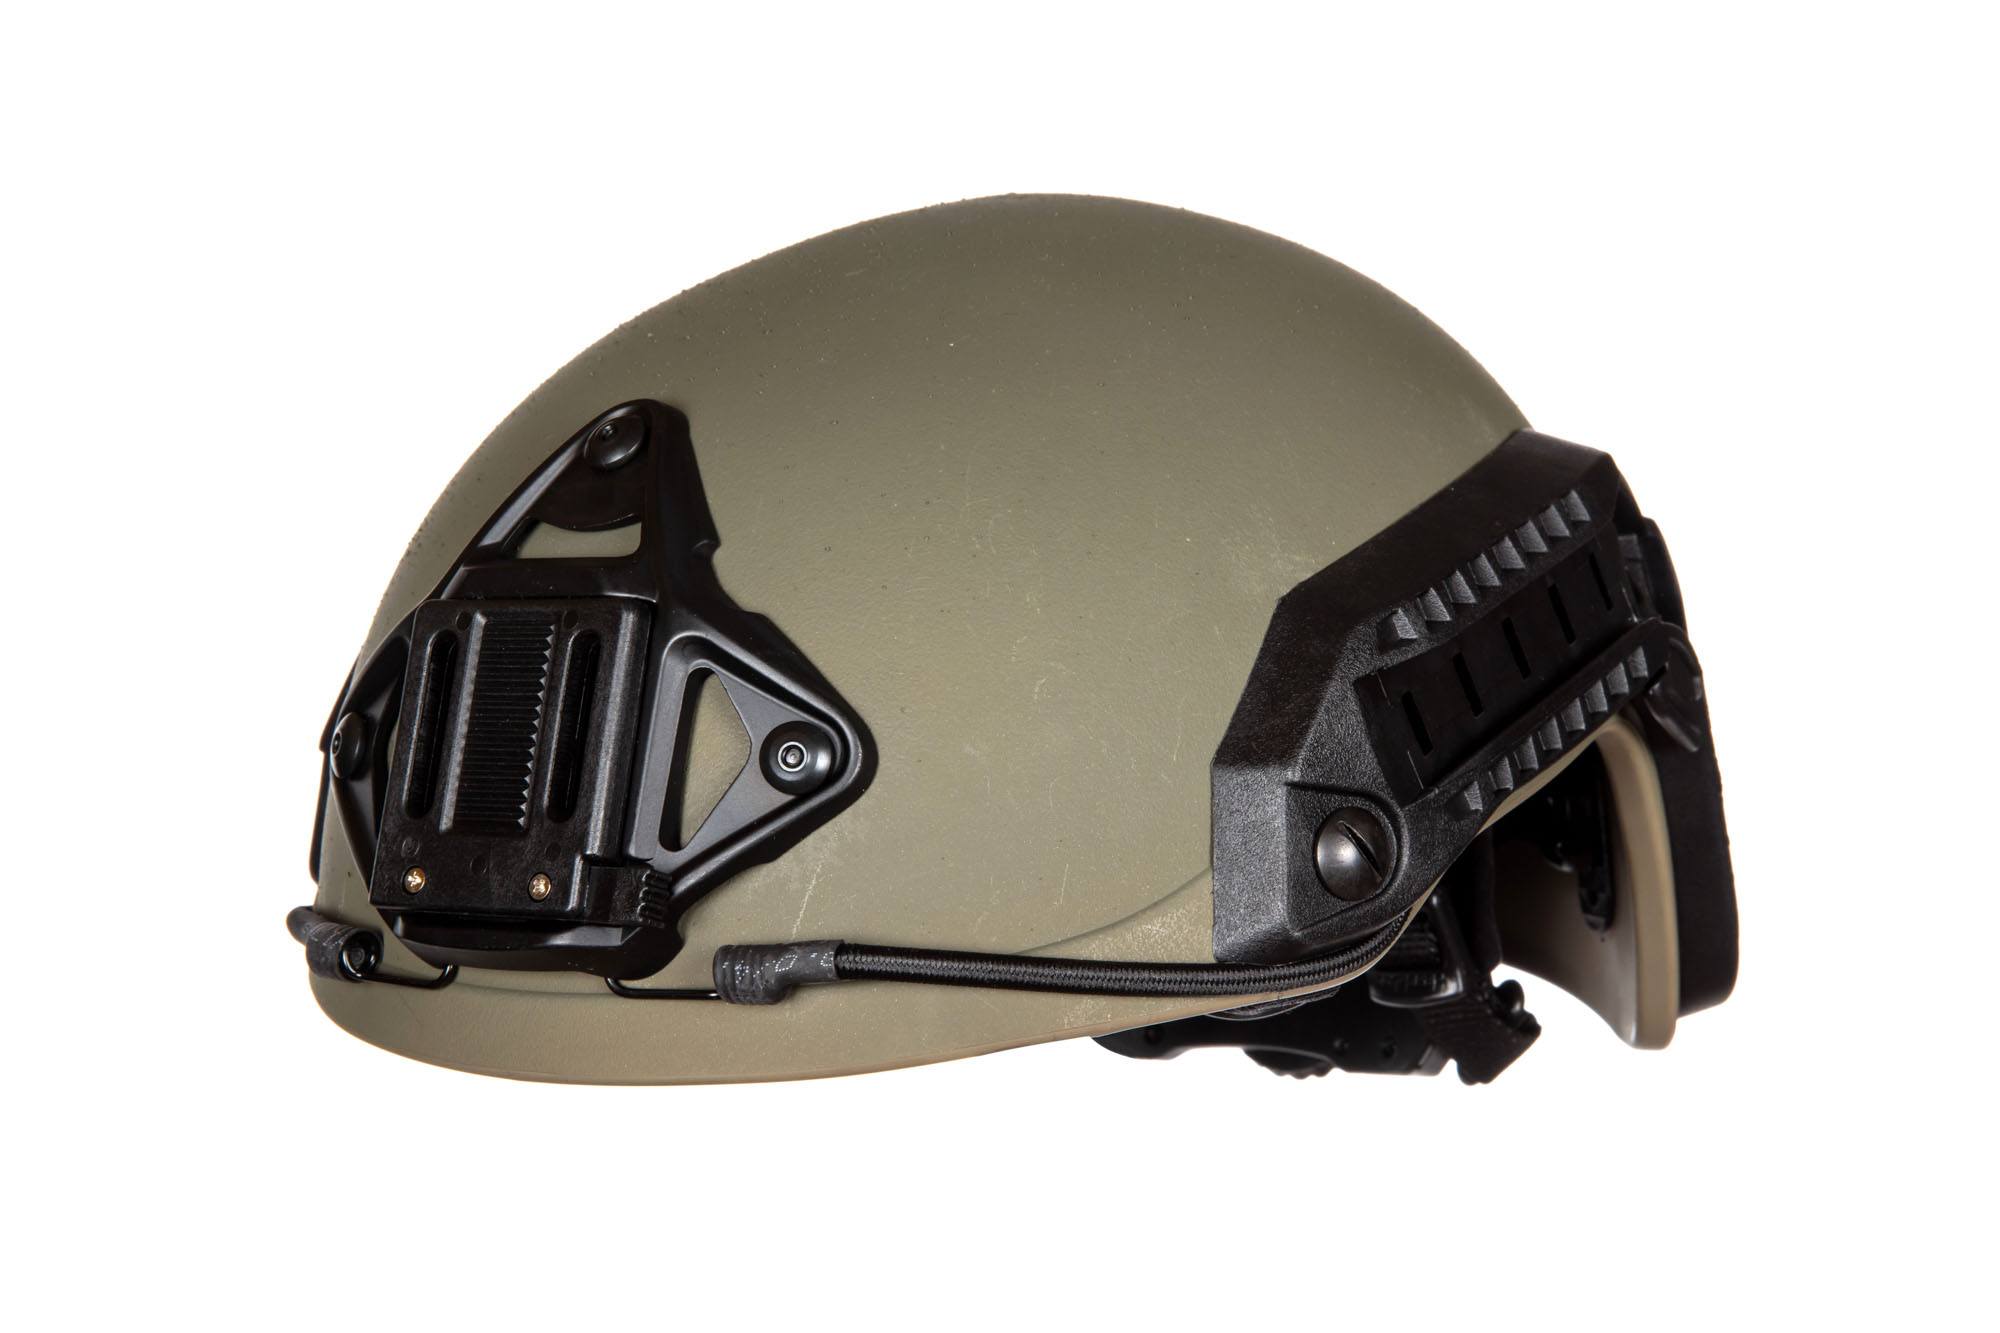 Maritime Helmet replica - Ranger Green (S/M)